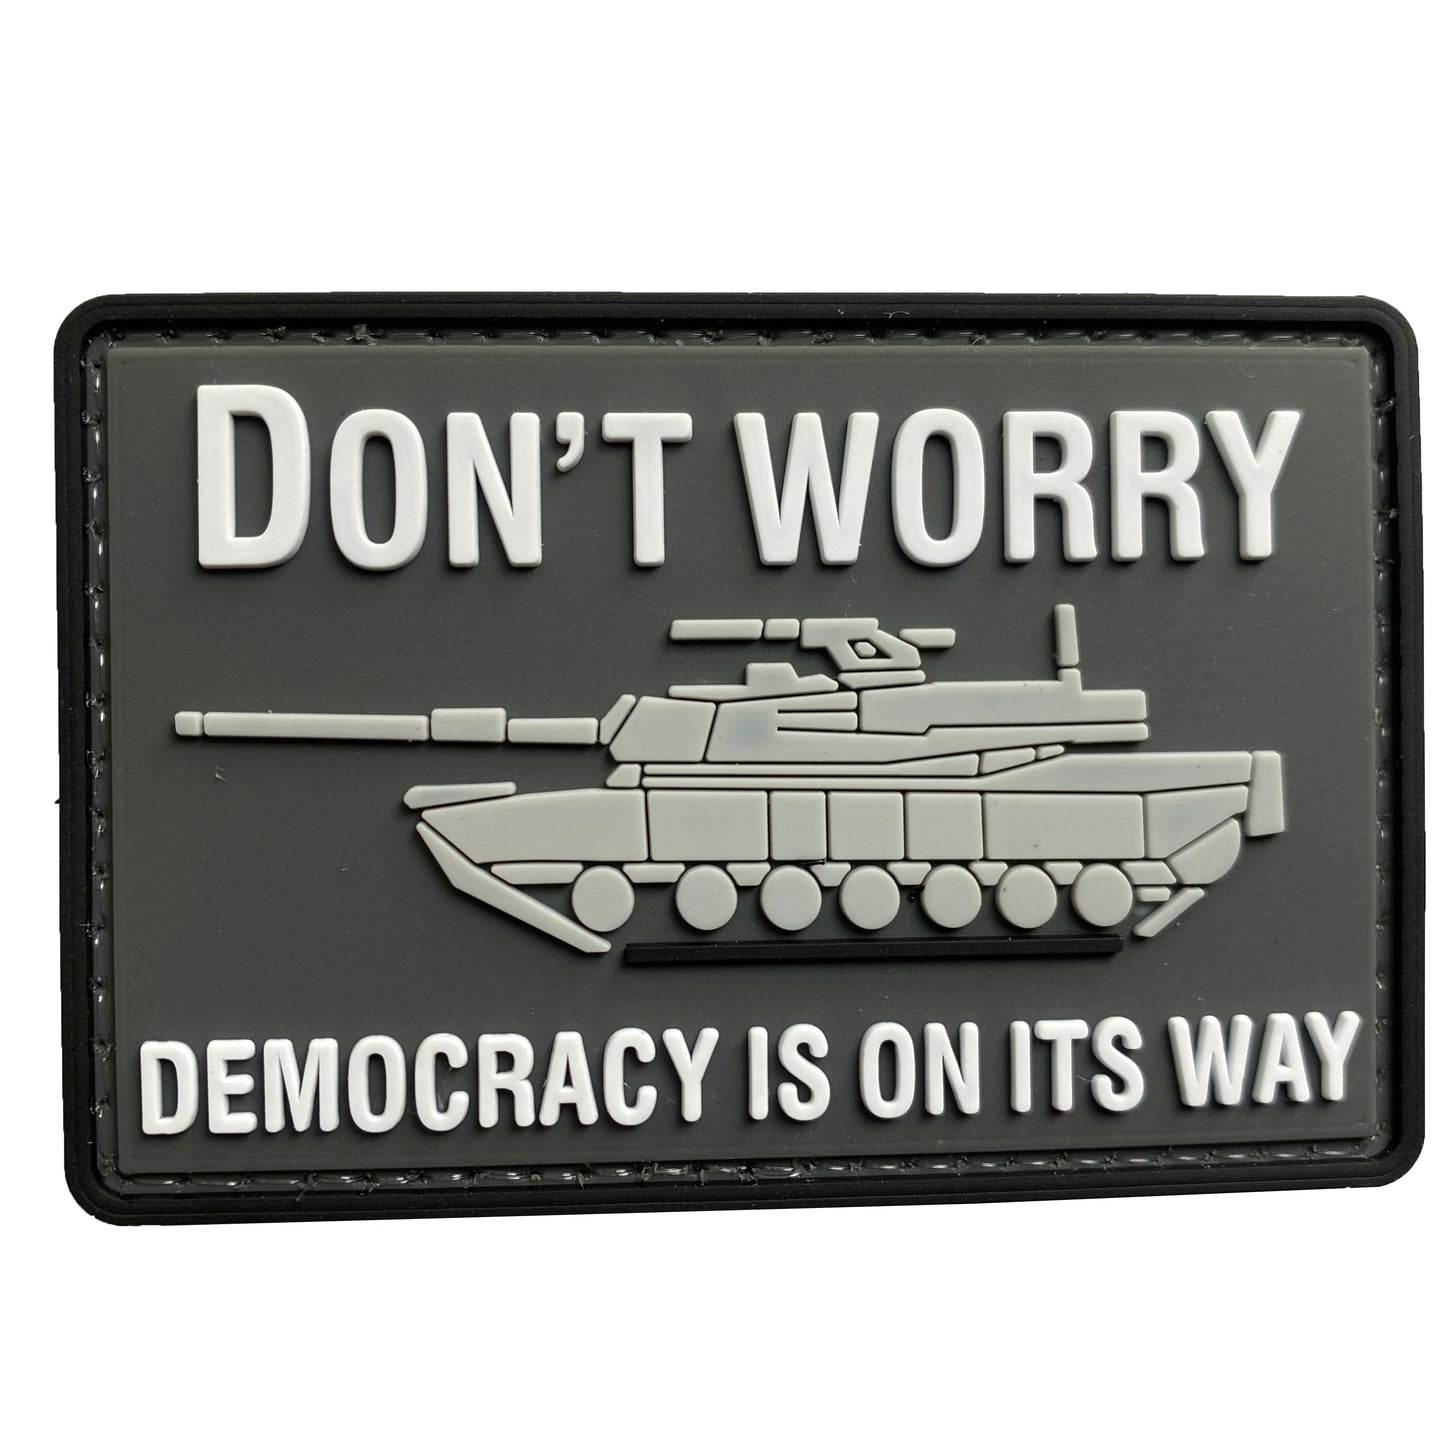 ZLS-TK - Dont Worry.Democra cy is on Its Way Tank PVC Patch